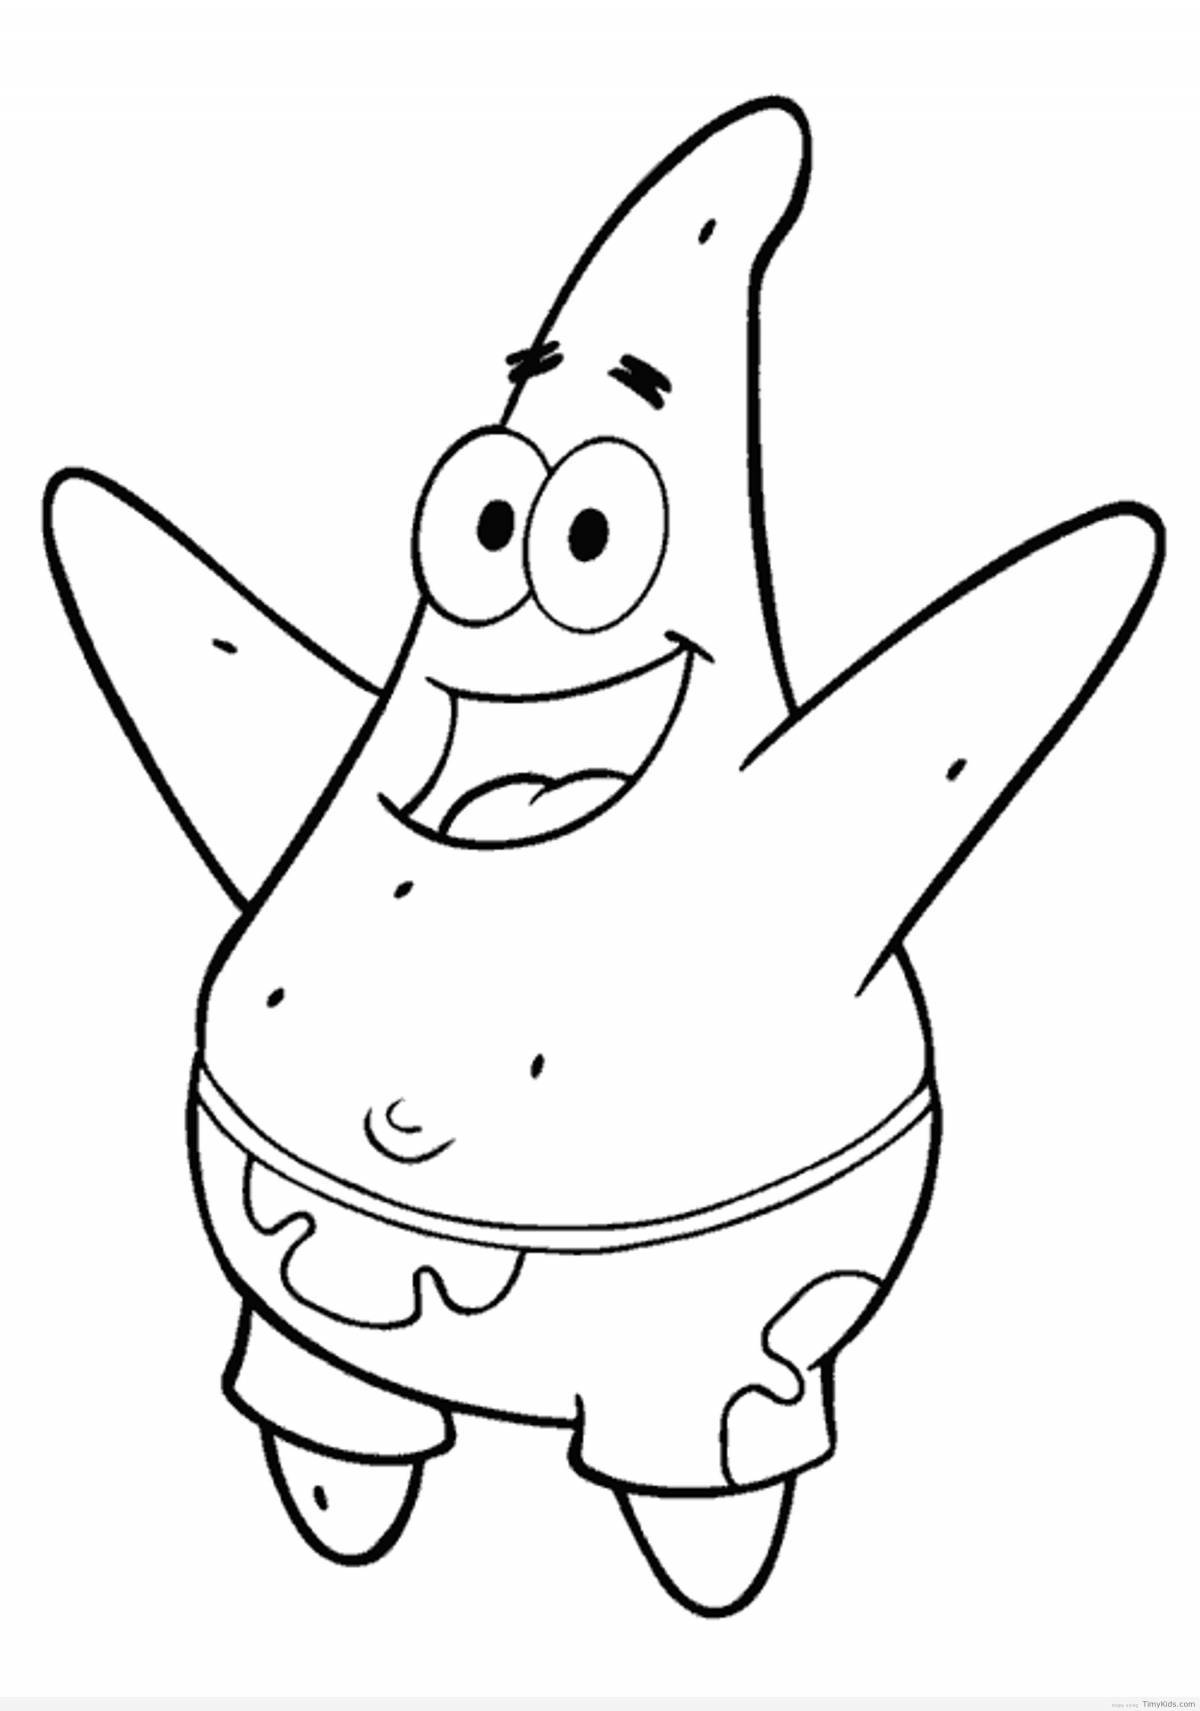 Patrick #5